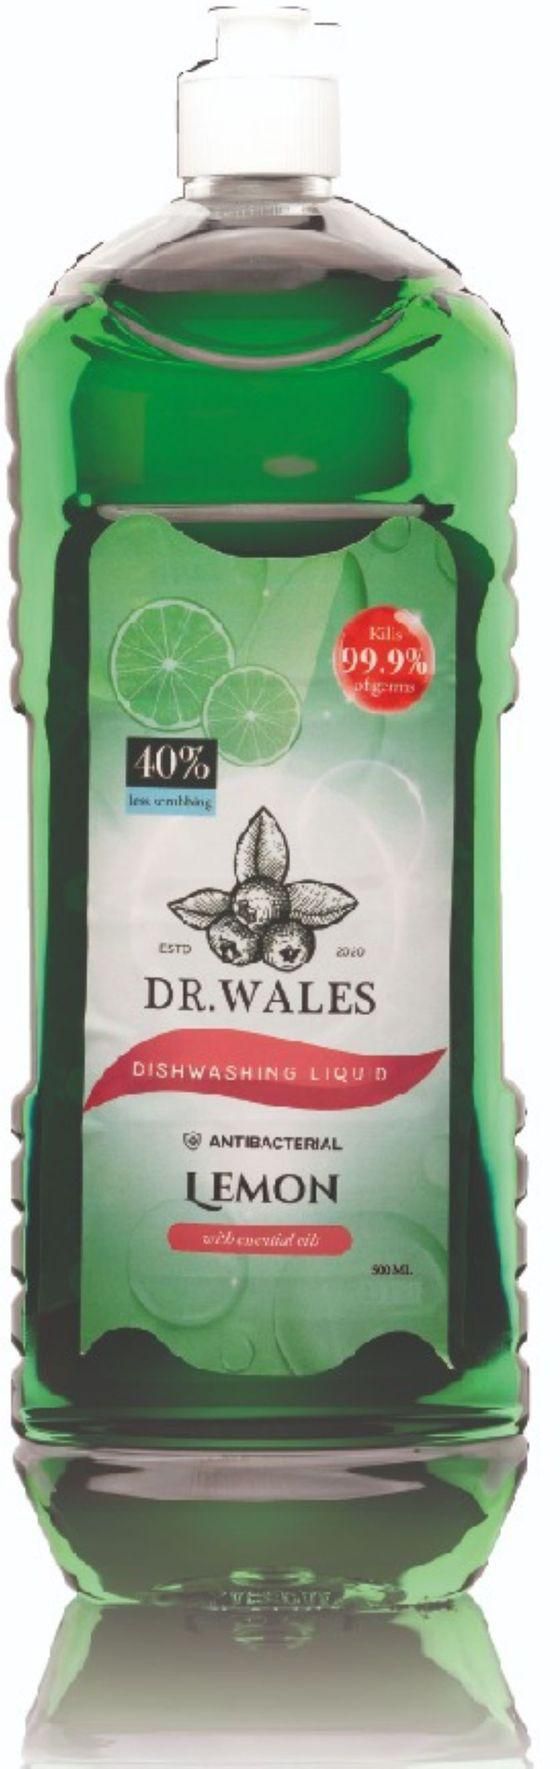 DR. WALES Dishwashing Liquid Detergent- Lemon 500ml